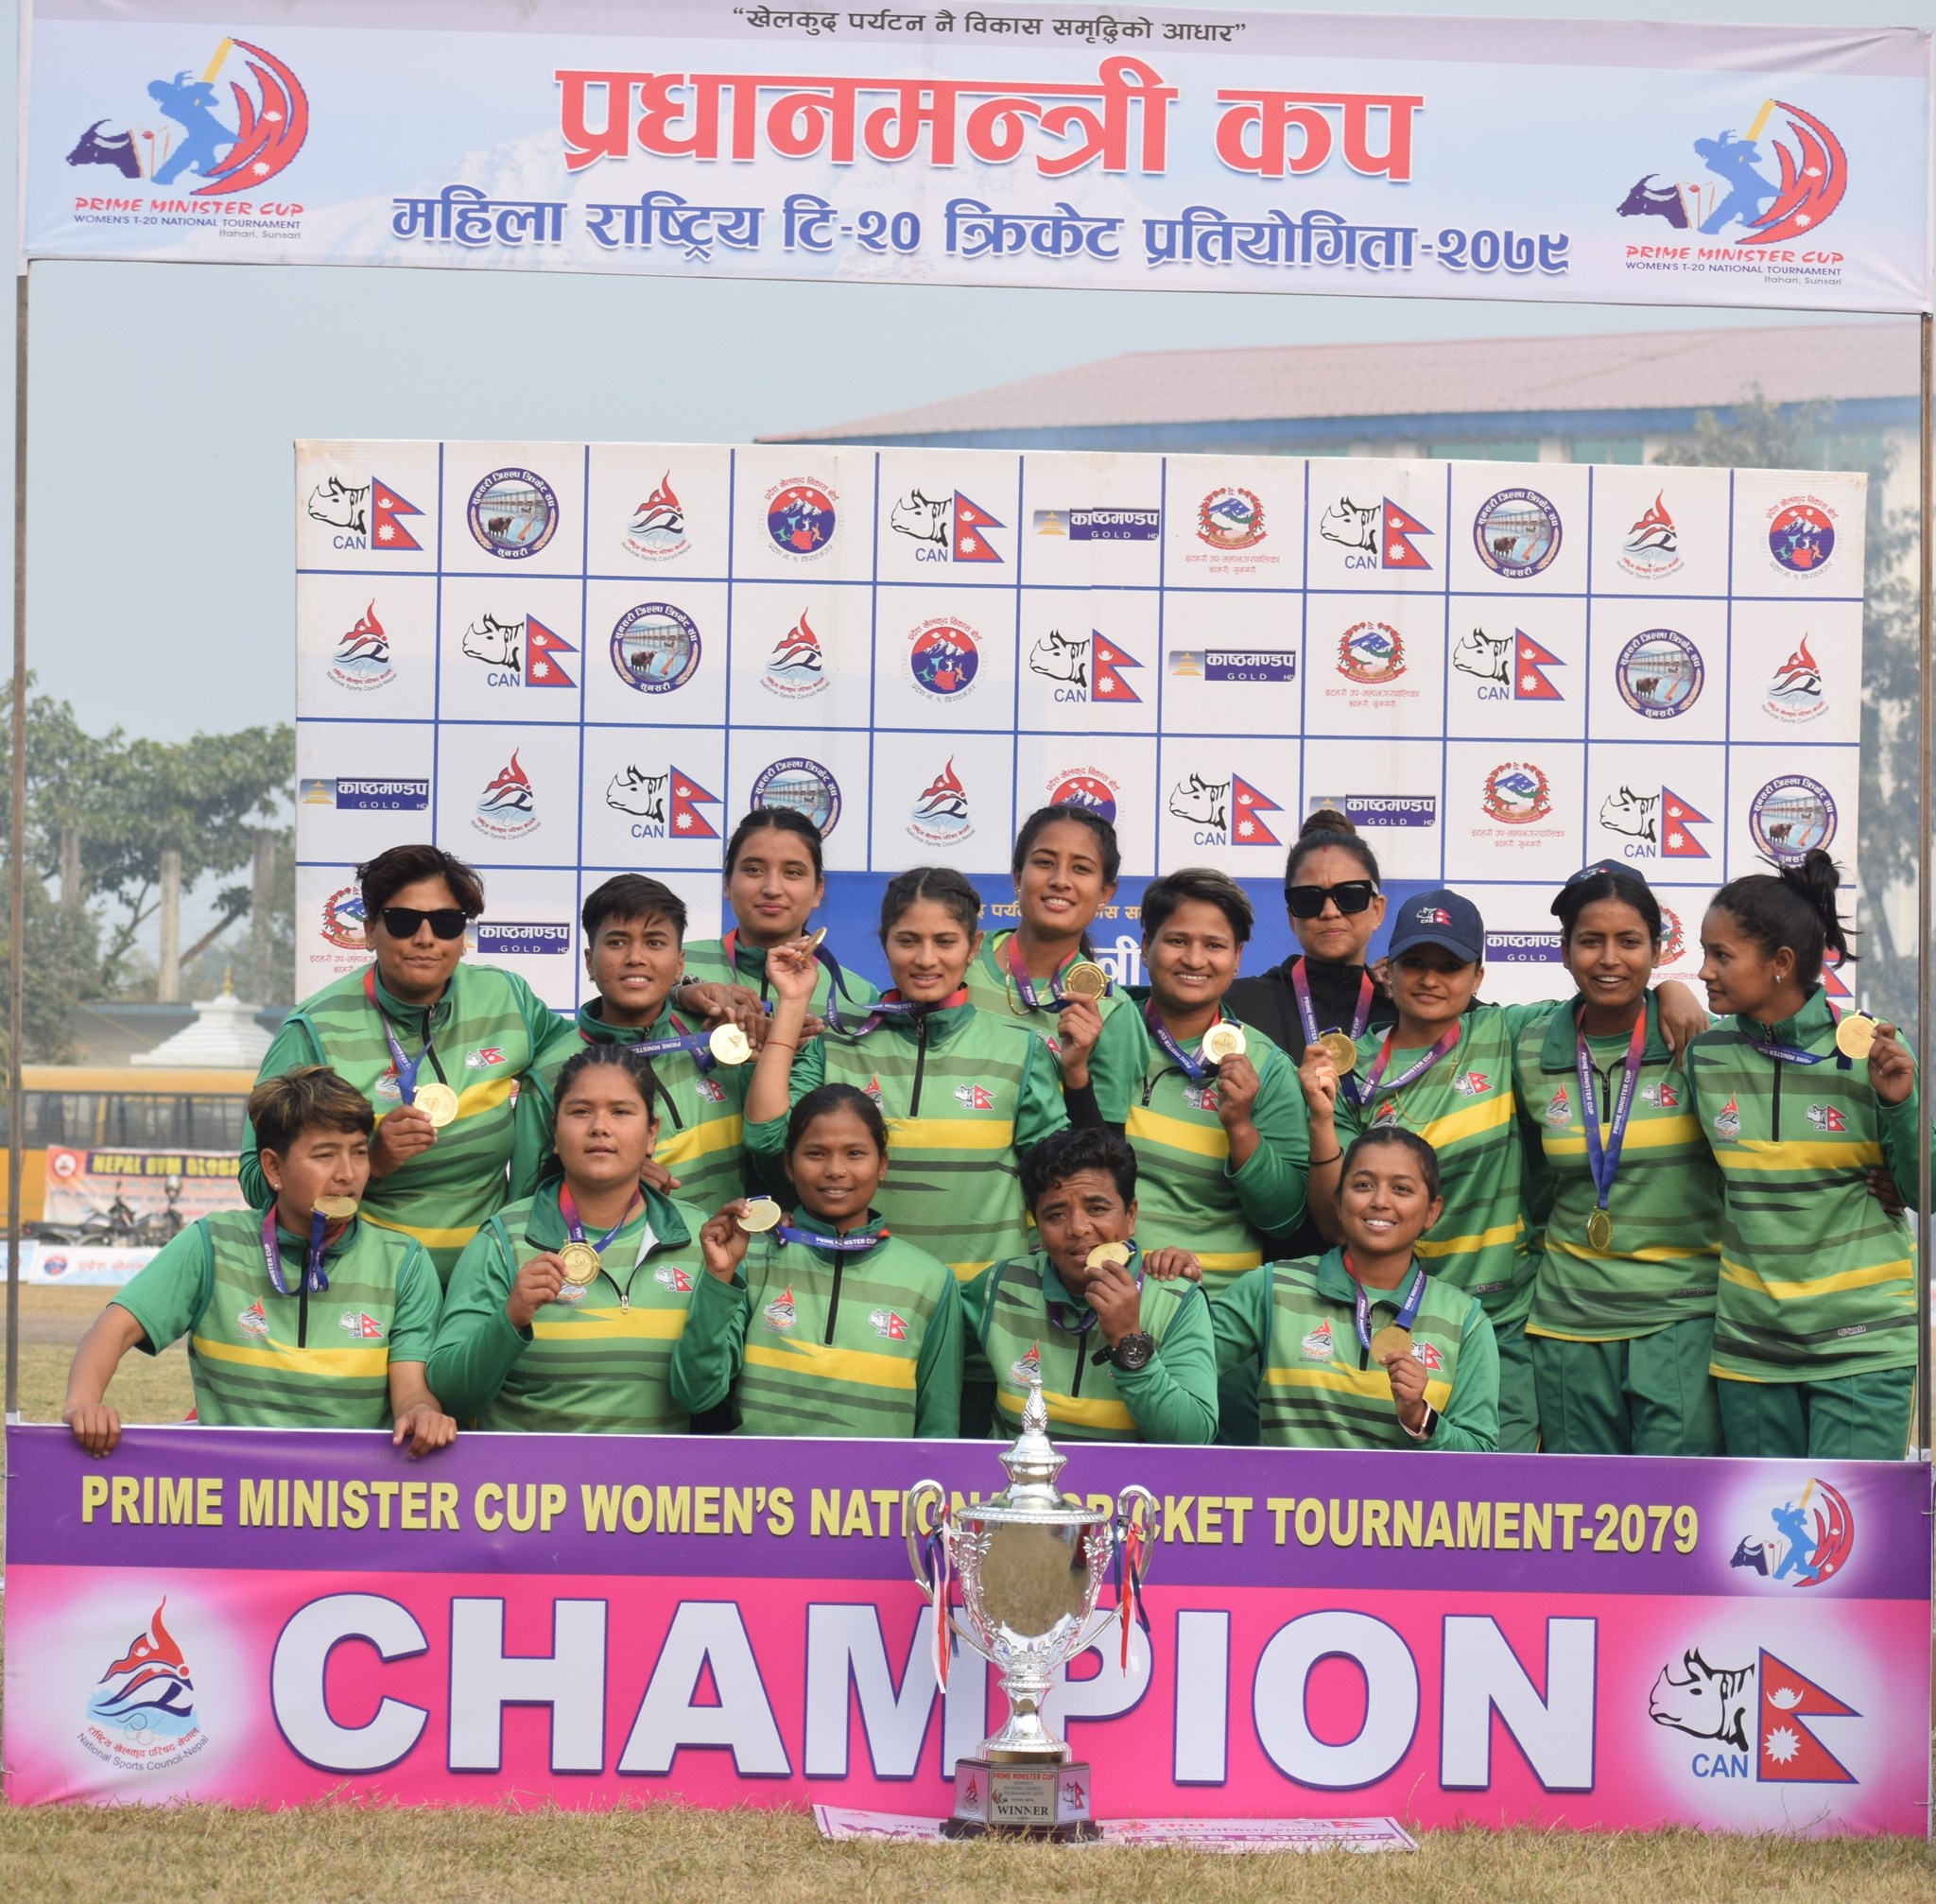 Sudurpaschim clinches Prime Minister’s Cup Women’s National T20 Cricket title